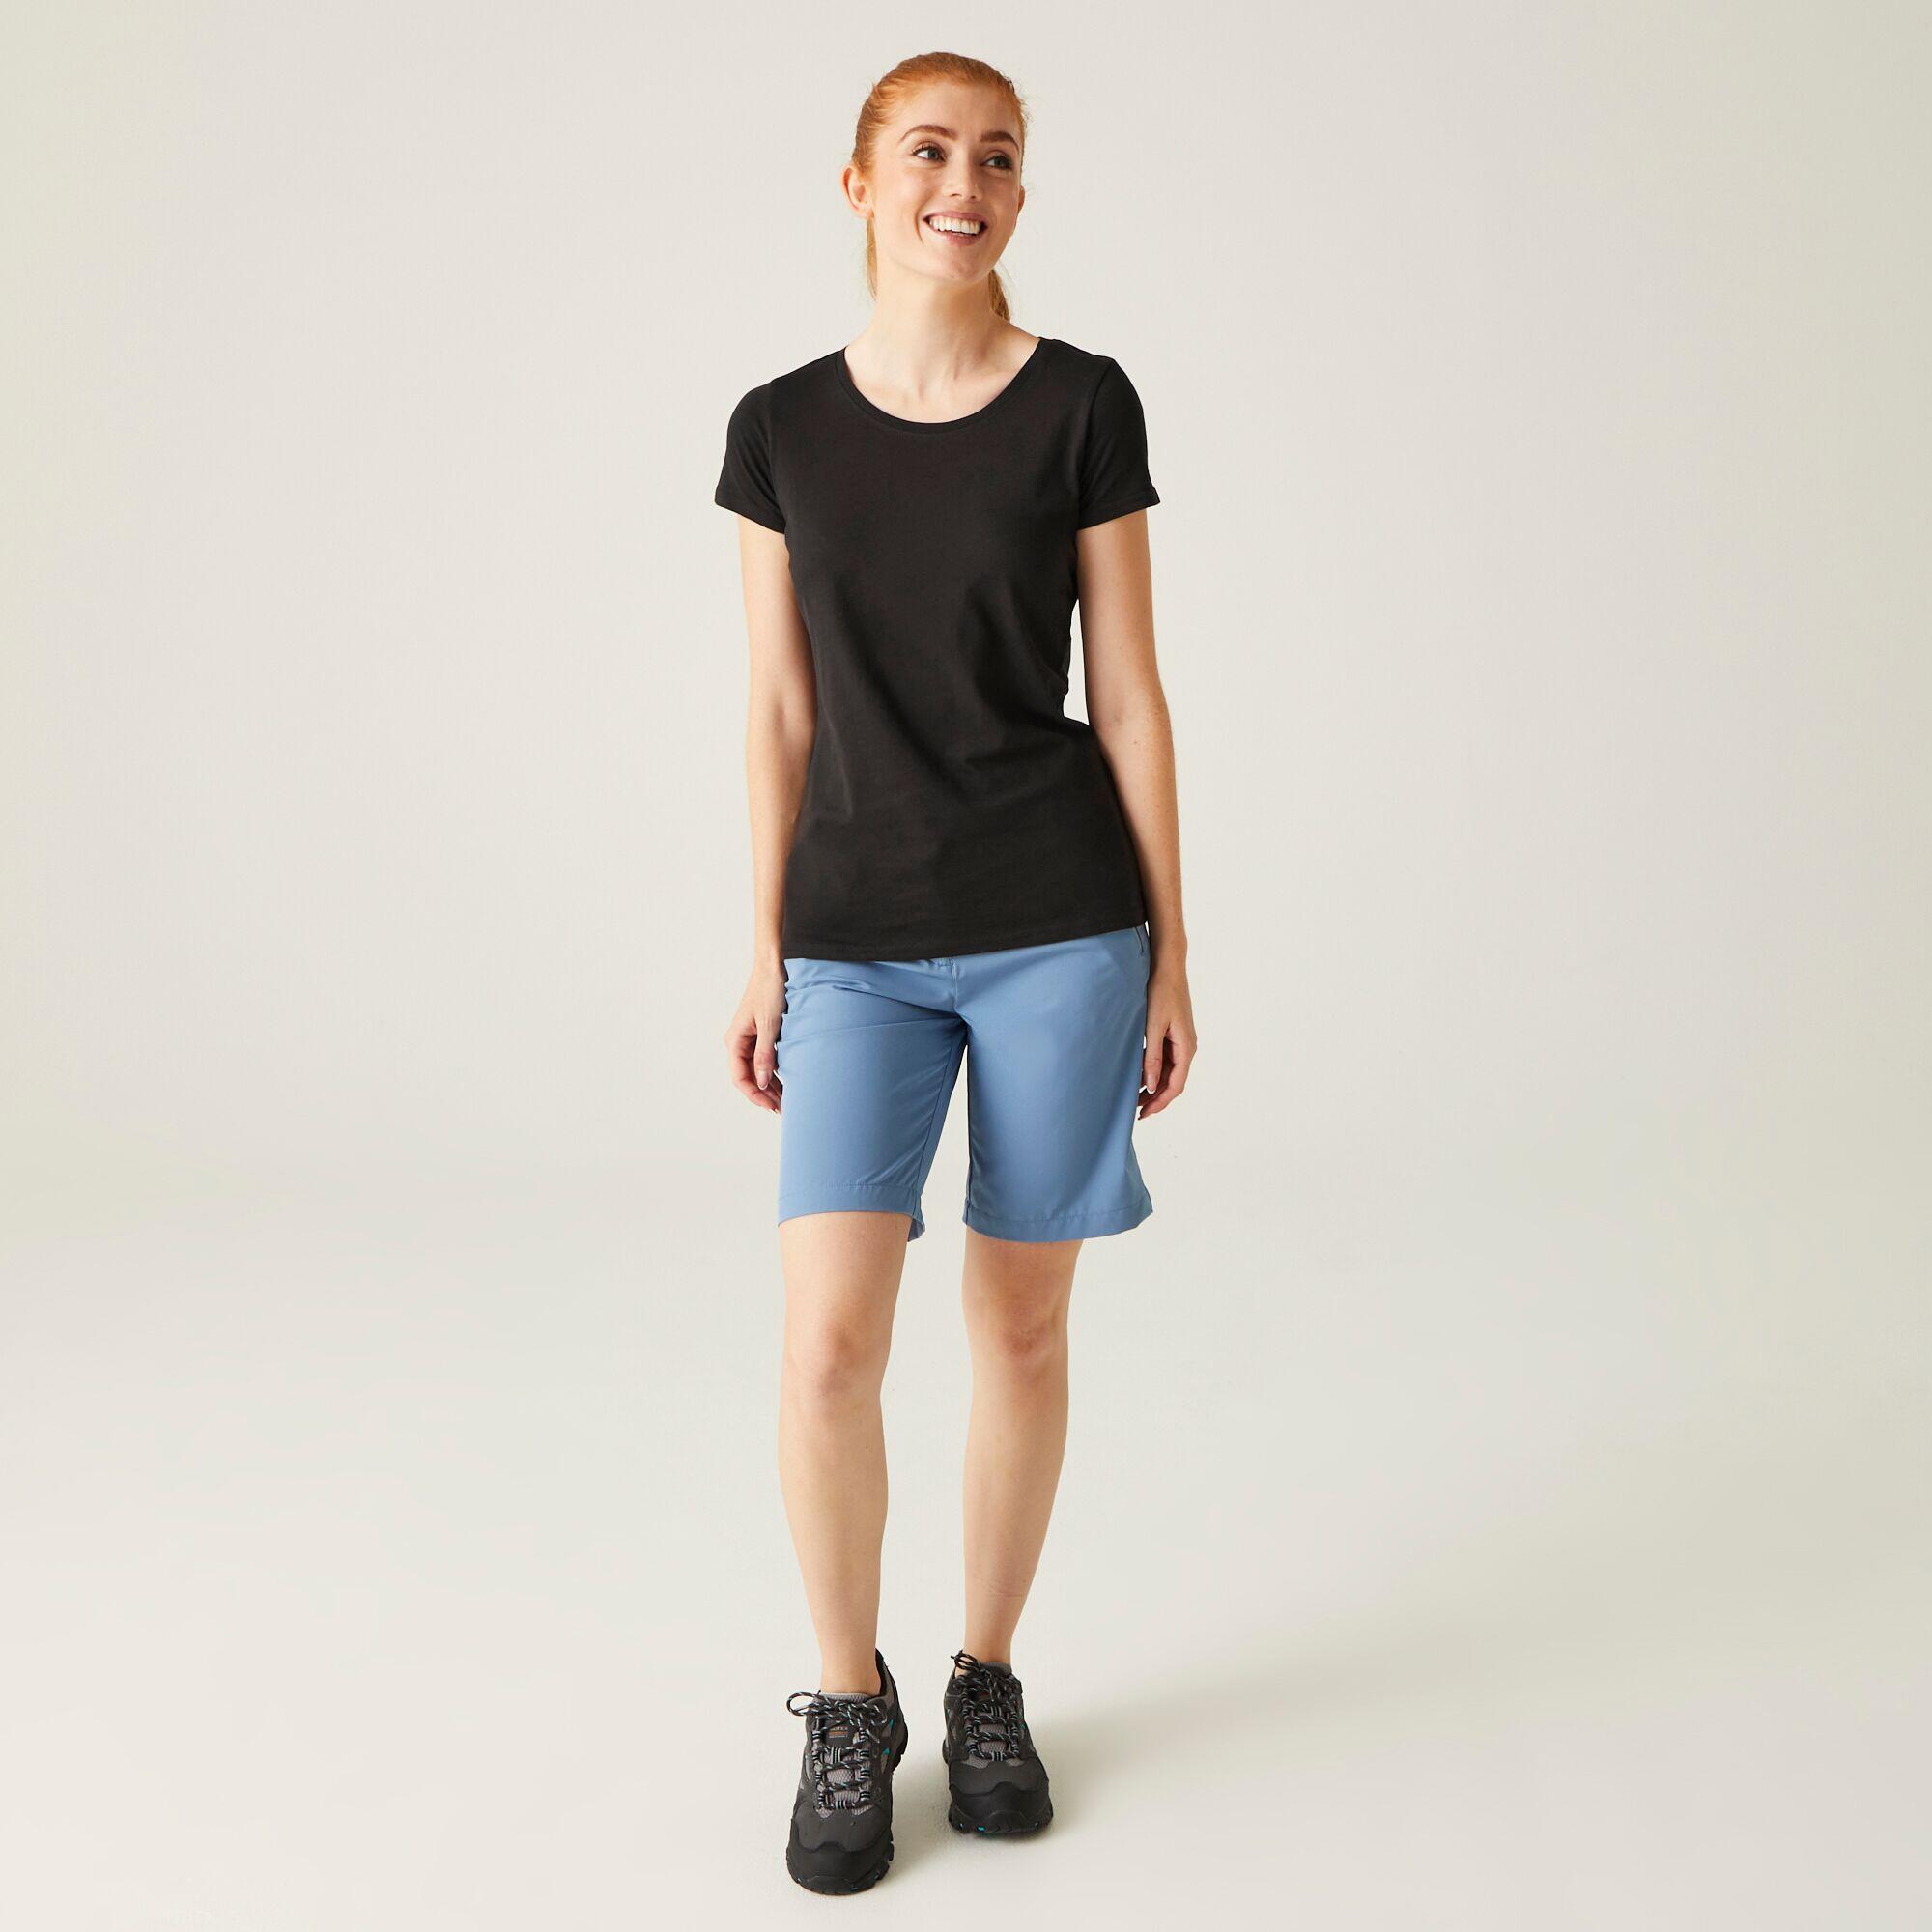 Carlie Women's Walking Short Sleeve T-Shirt - Black 3/5